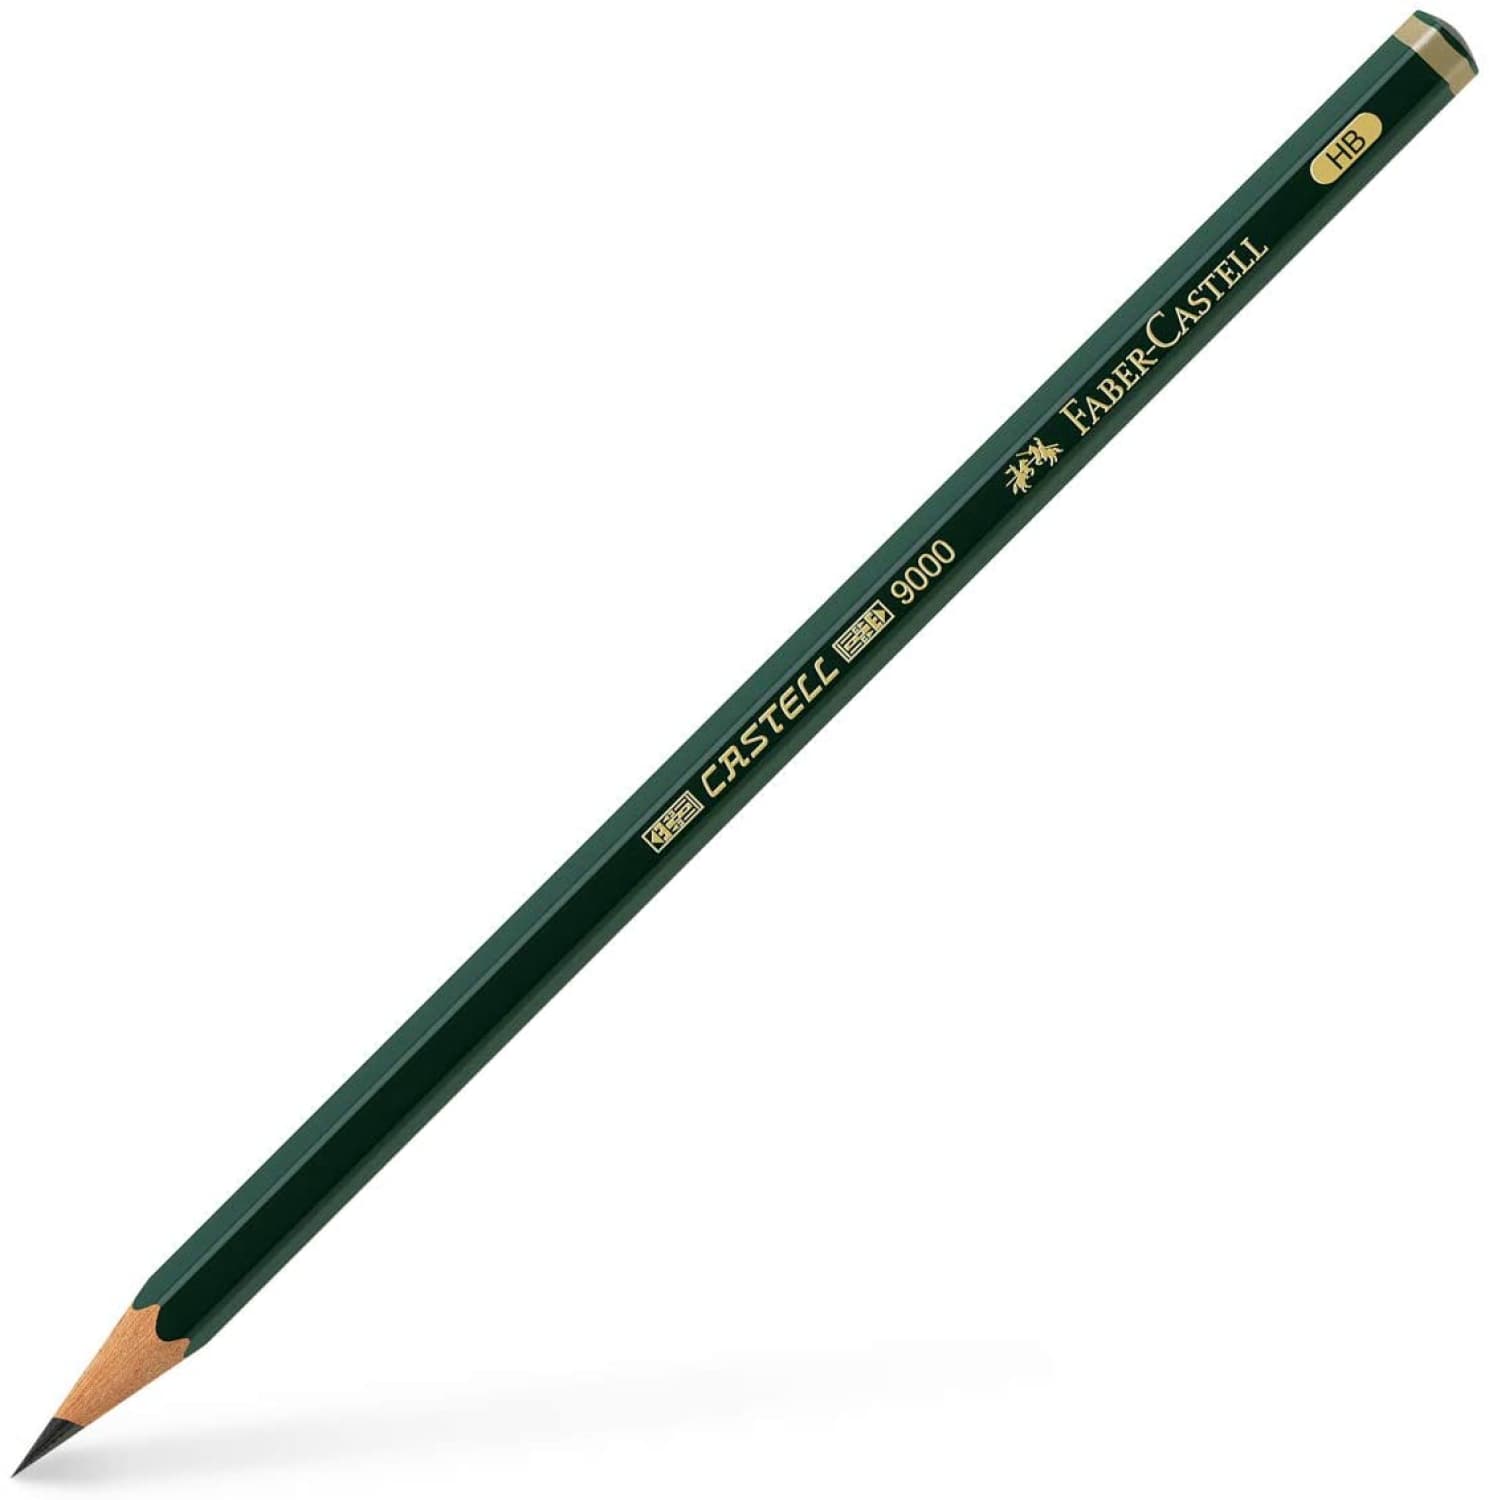 Boîte de 12 crayons graphite Castell 9000 de Faber-Castell - So Creatif